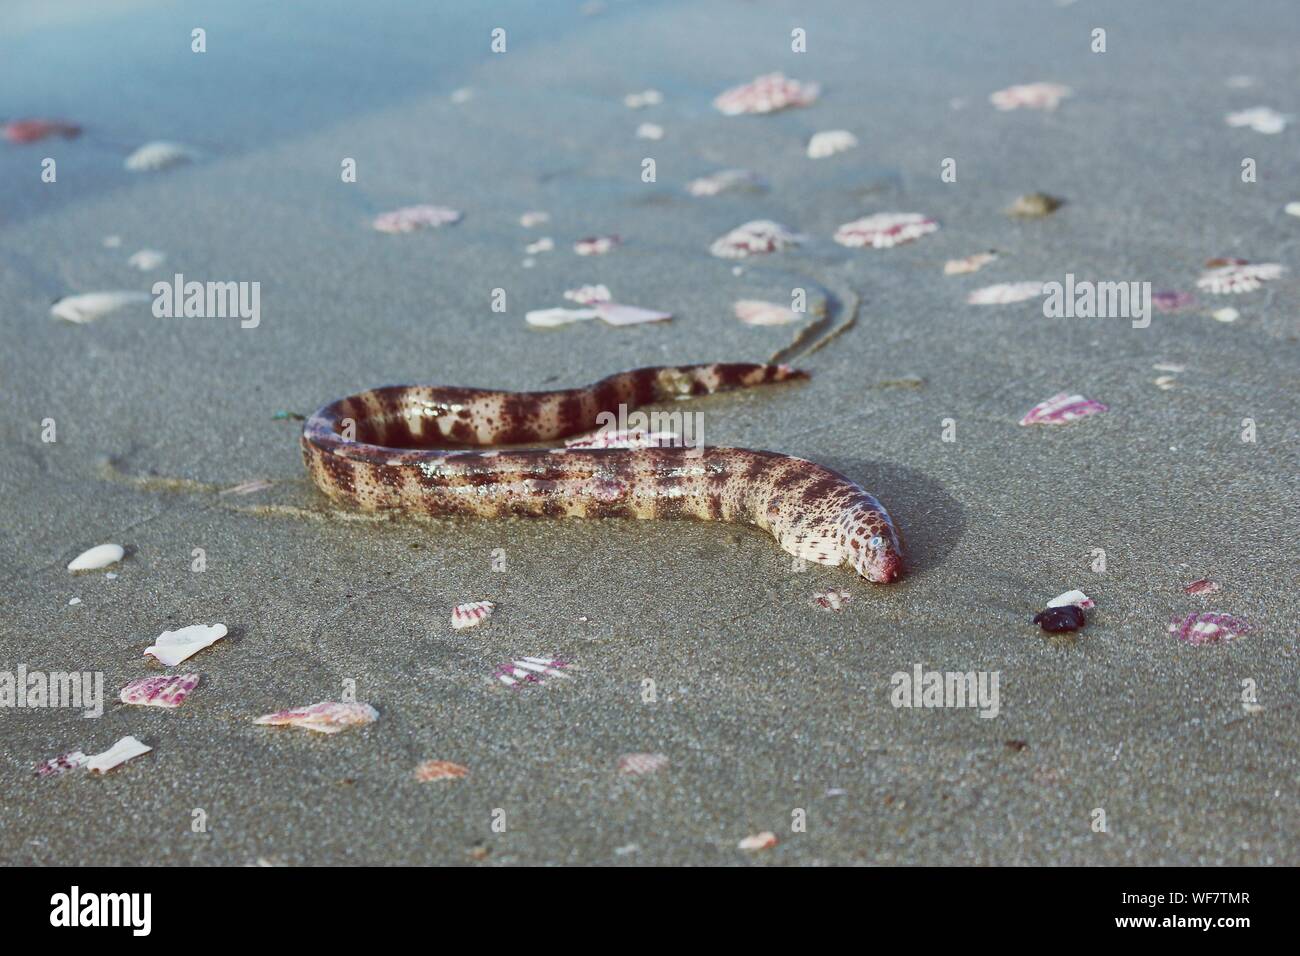 Dead Sea Snake On Sand At Beach Stock Photo